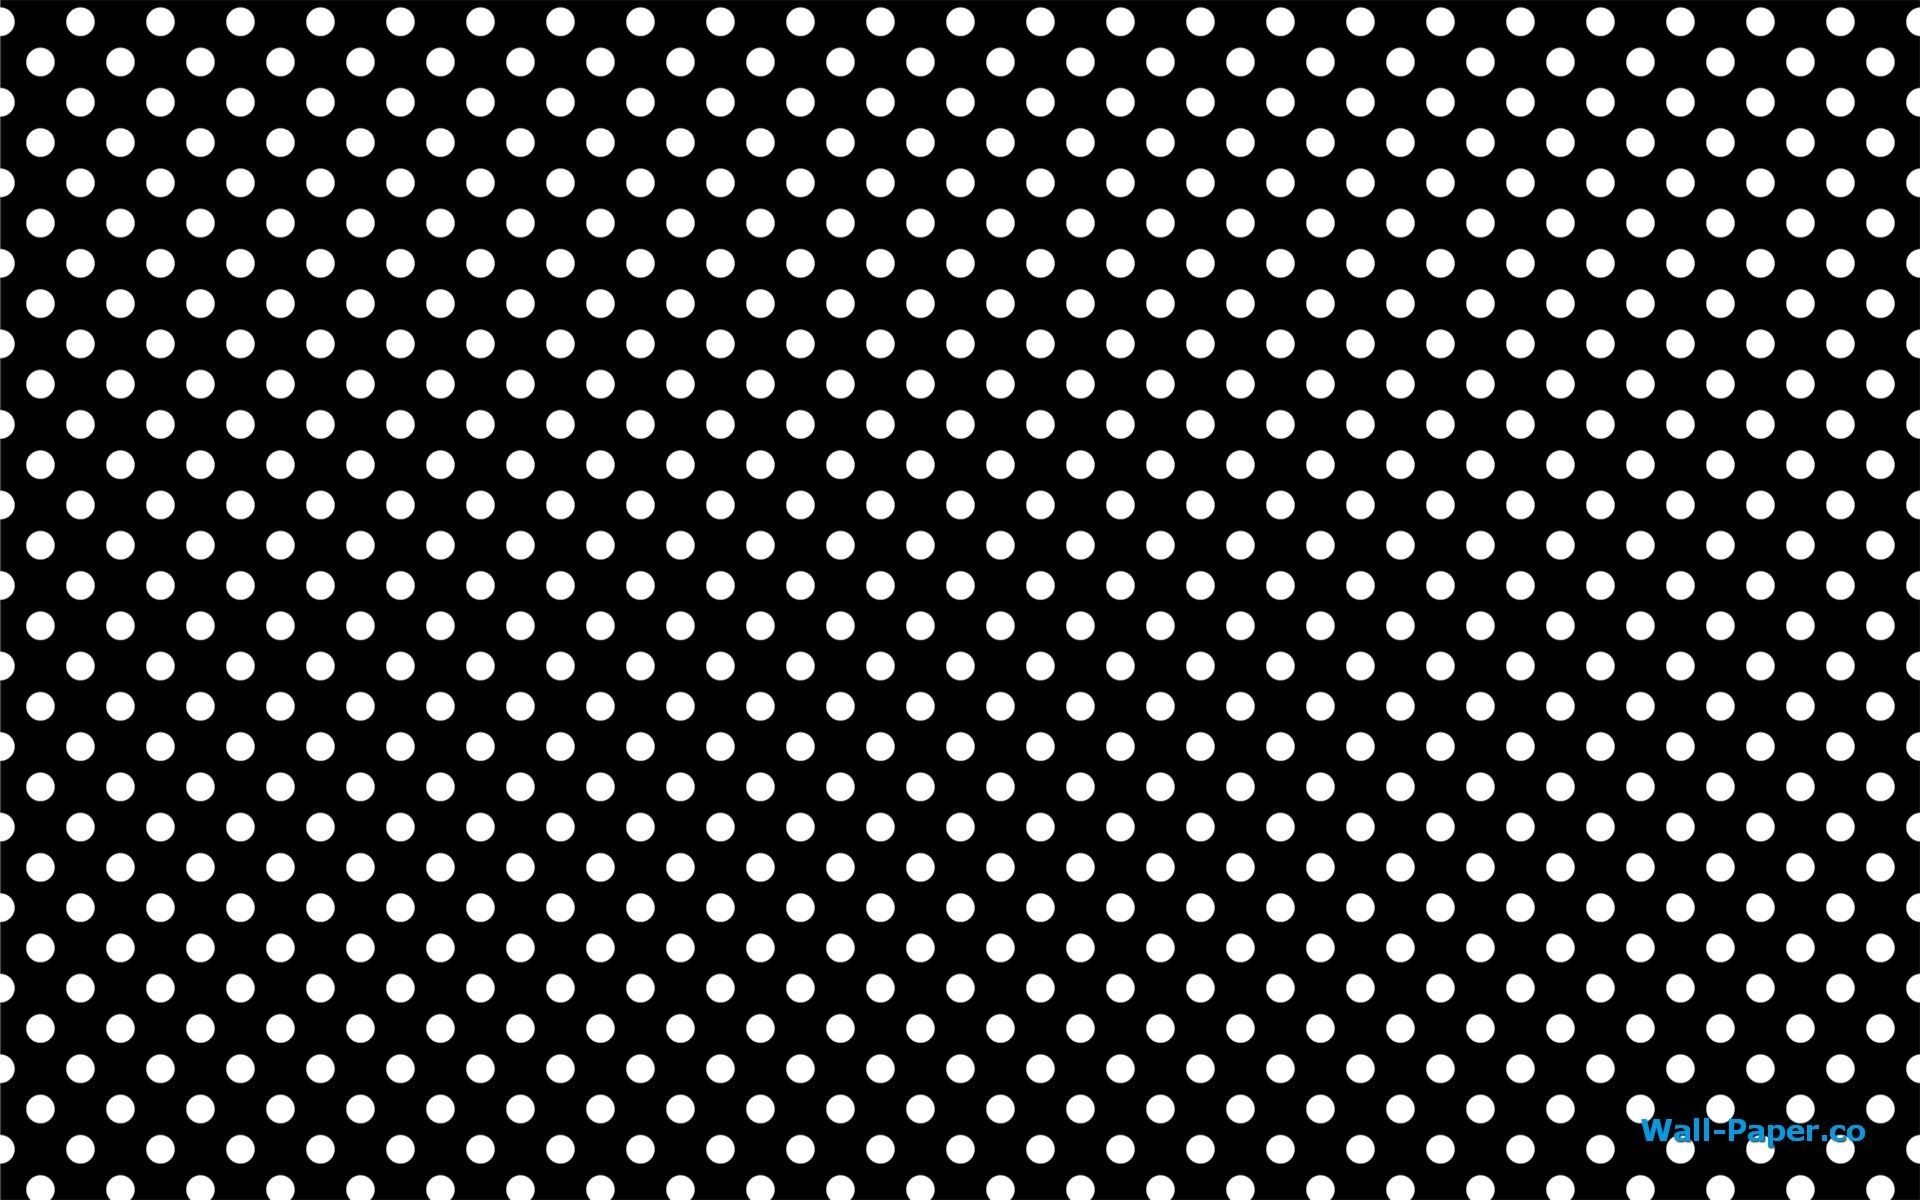 Black Polka Dot Wallpaper (39+ images)